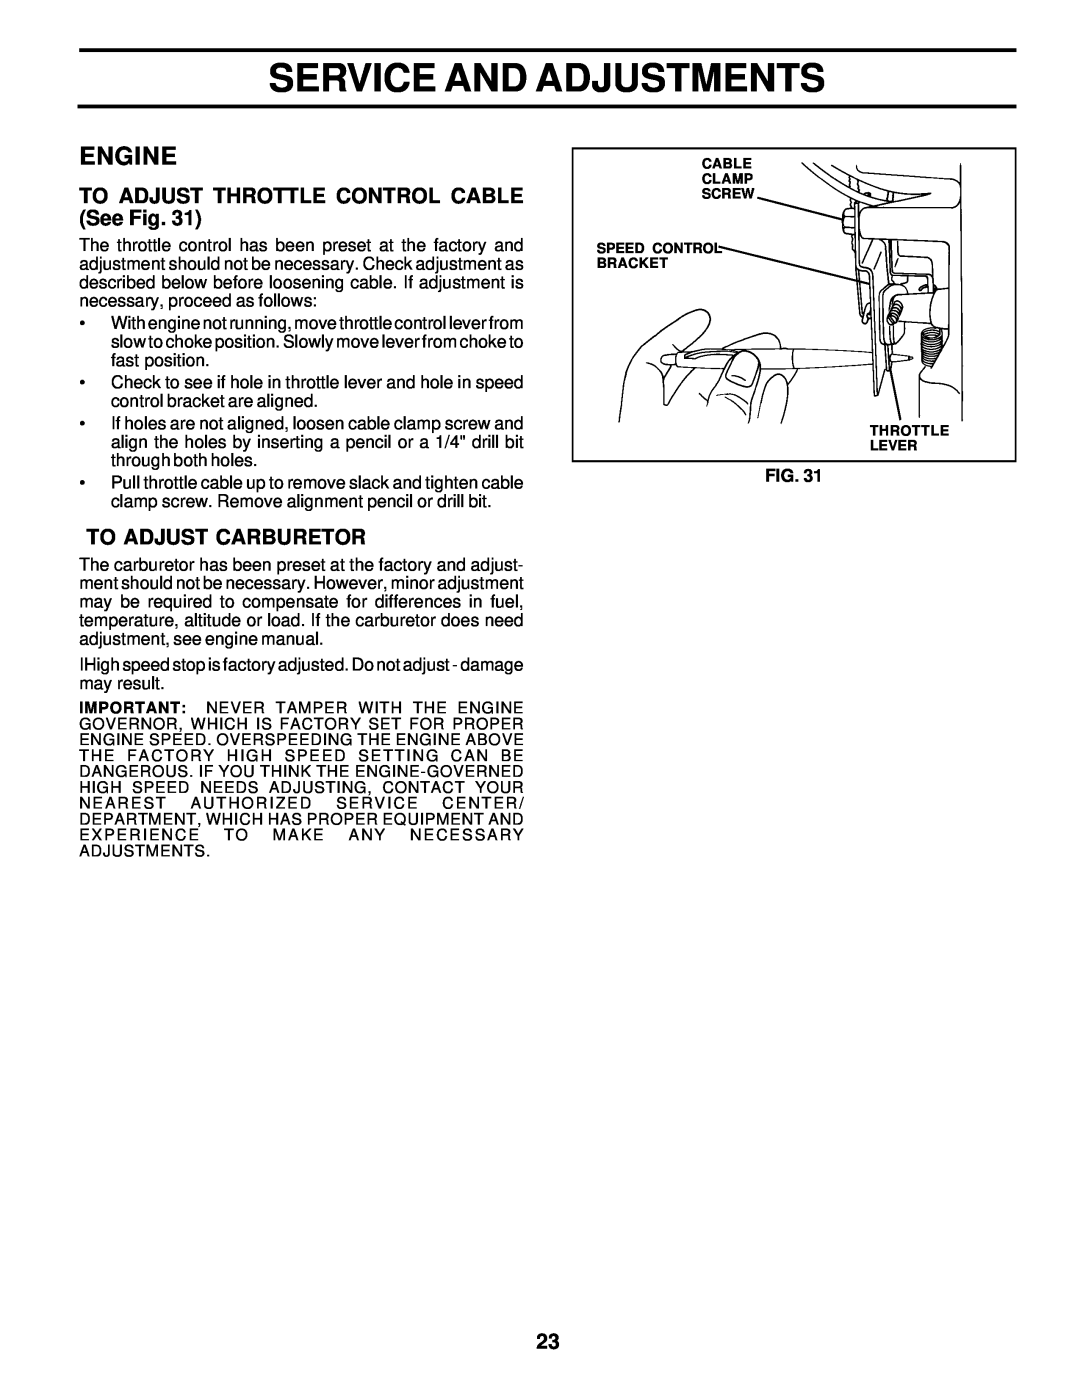 Poulan 177545 owner manual TO ADJUST THROTTLE CONTROL CABLE See Fig, To Adjust Carburetor, Service And Adjustments, Engine 